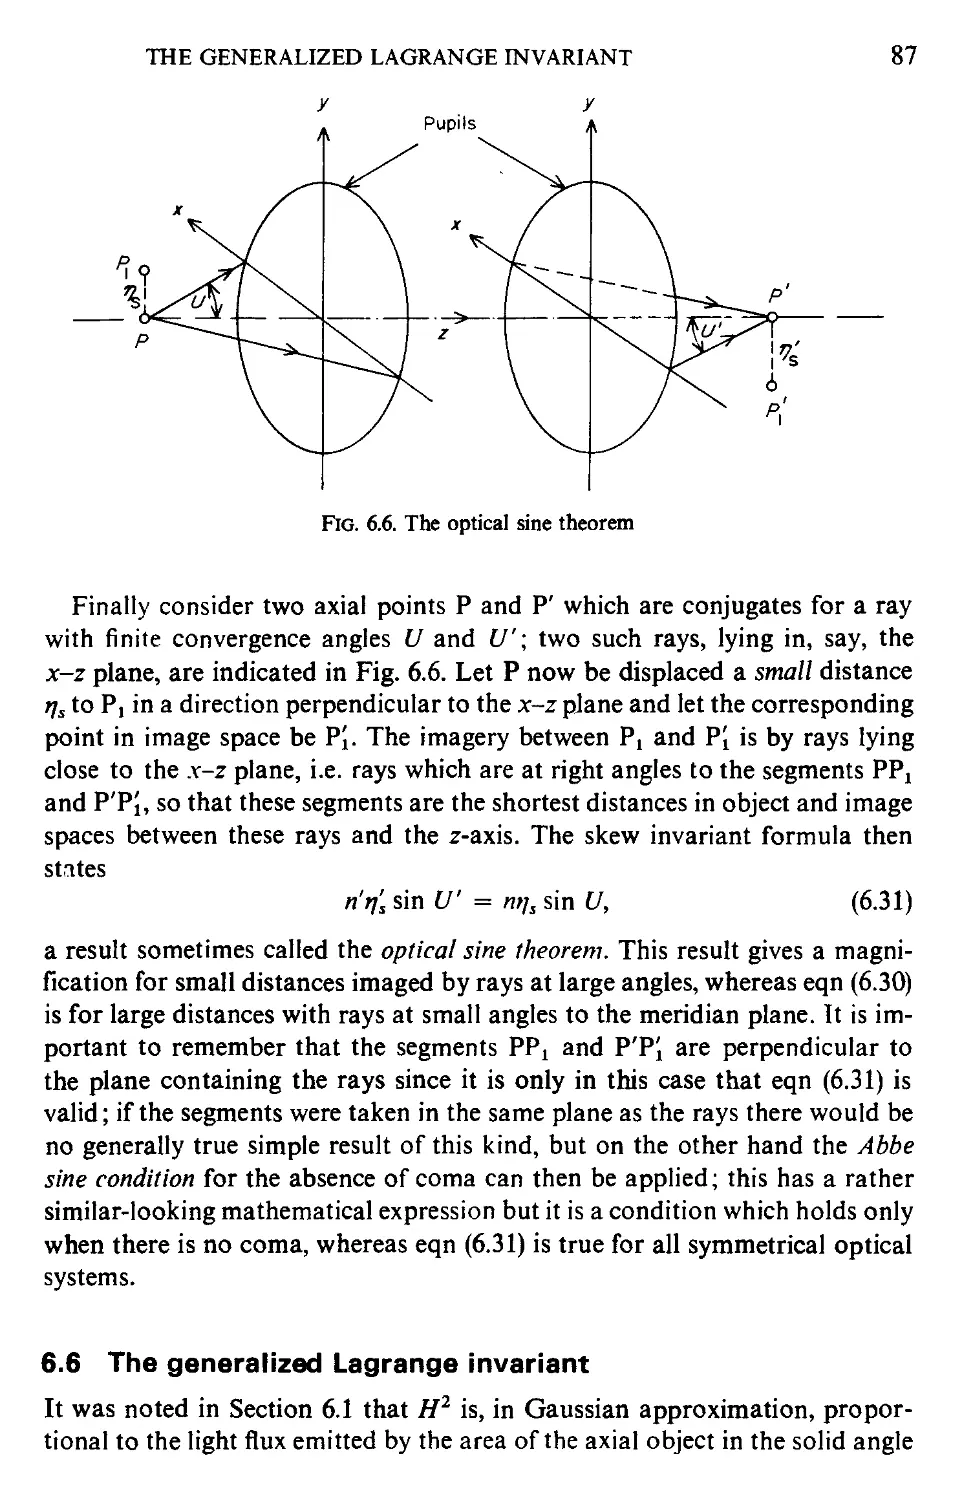 6.6 The generalized Lagrange invariant